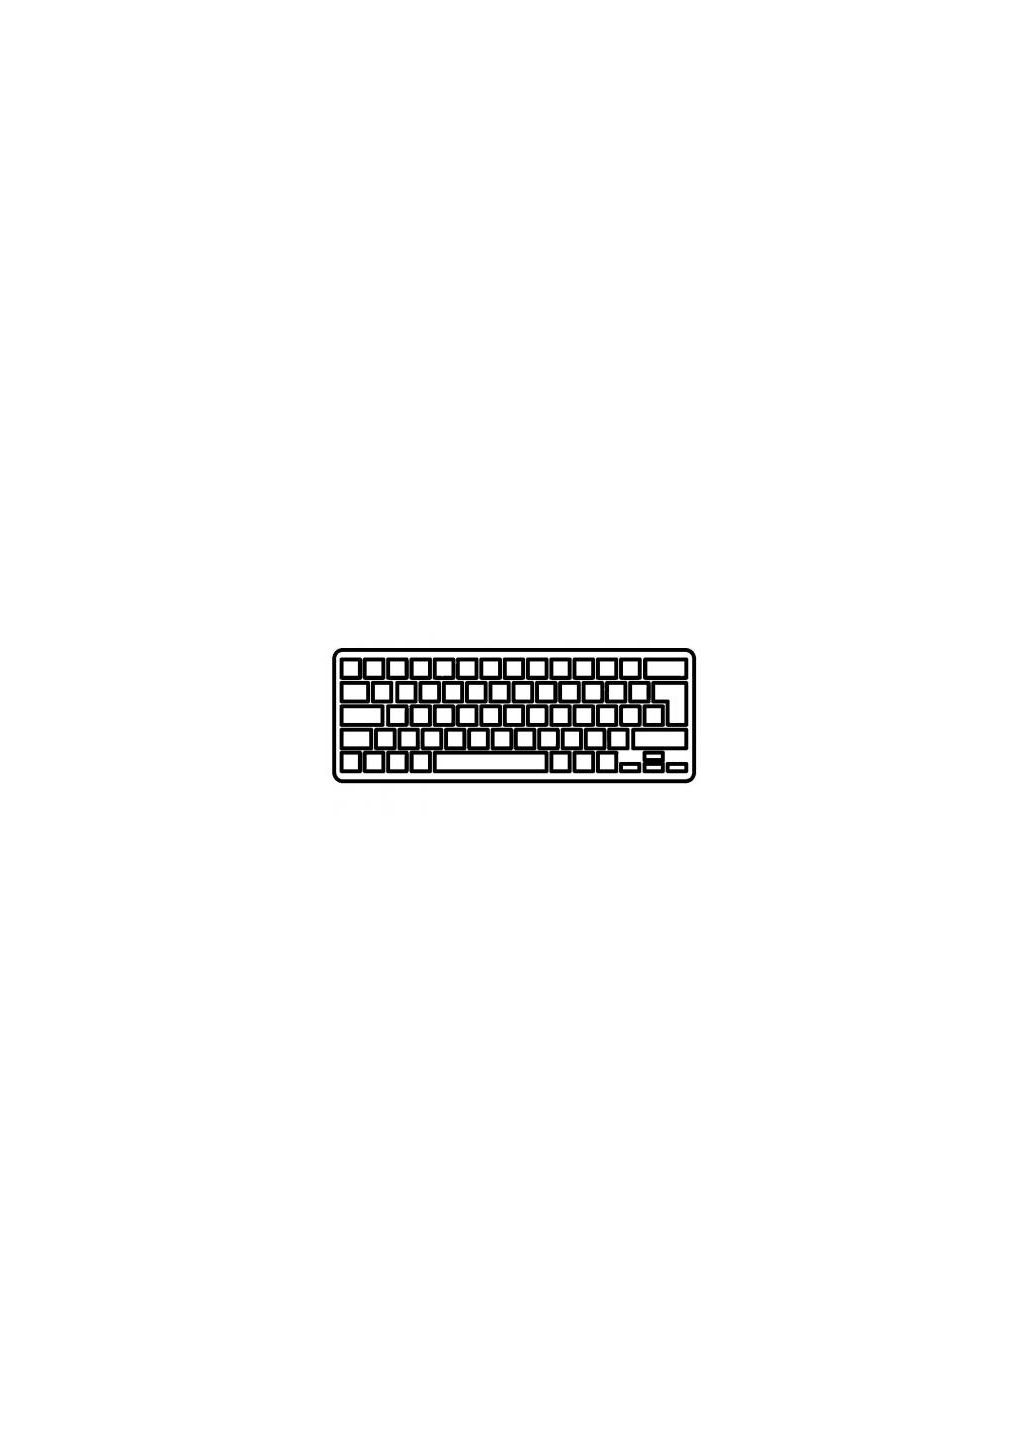 Клавиатура ноутбука (A43311) Dell inspiron mini 11z/1110 series черная ru (276708061)